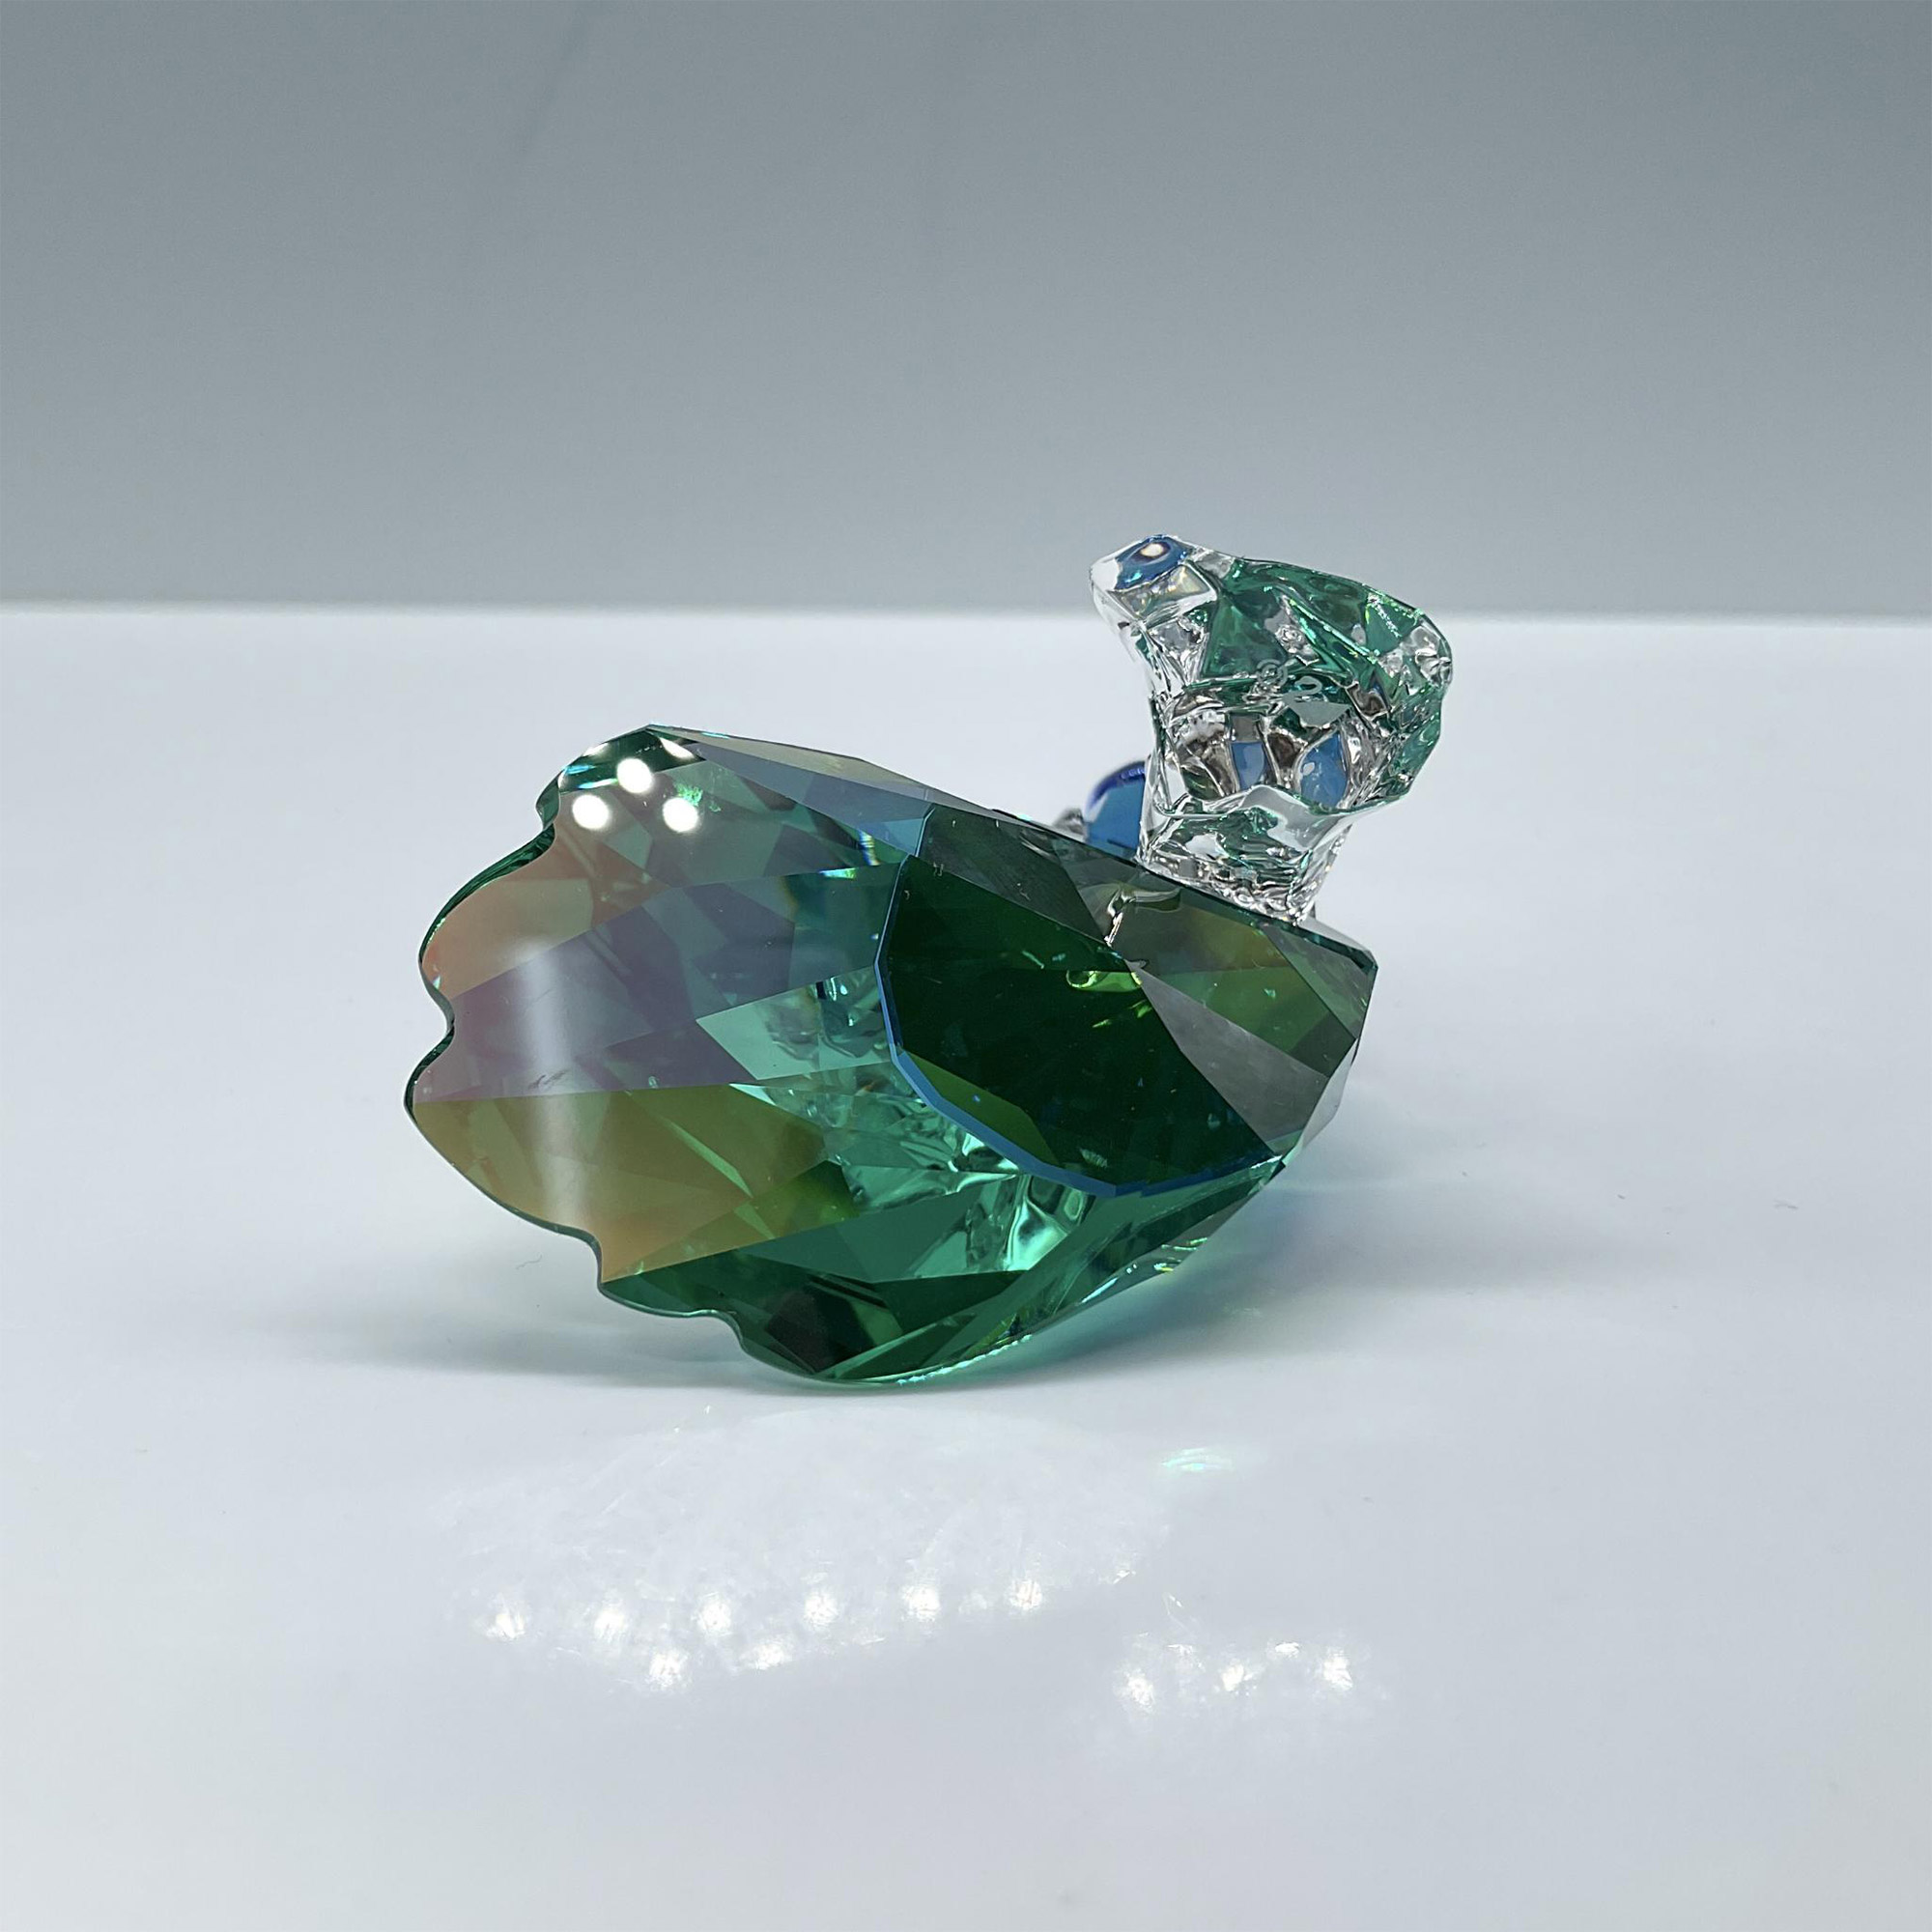 Swarovski Crystal Figurine, Peacock Loyalty Gift - Image 3 of 4